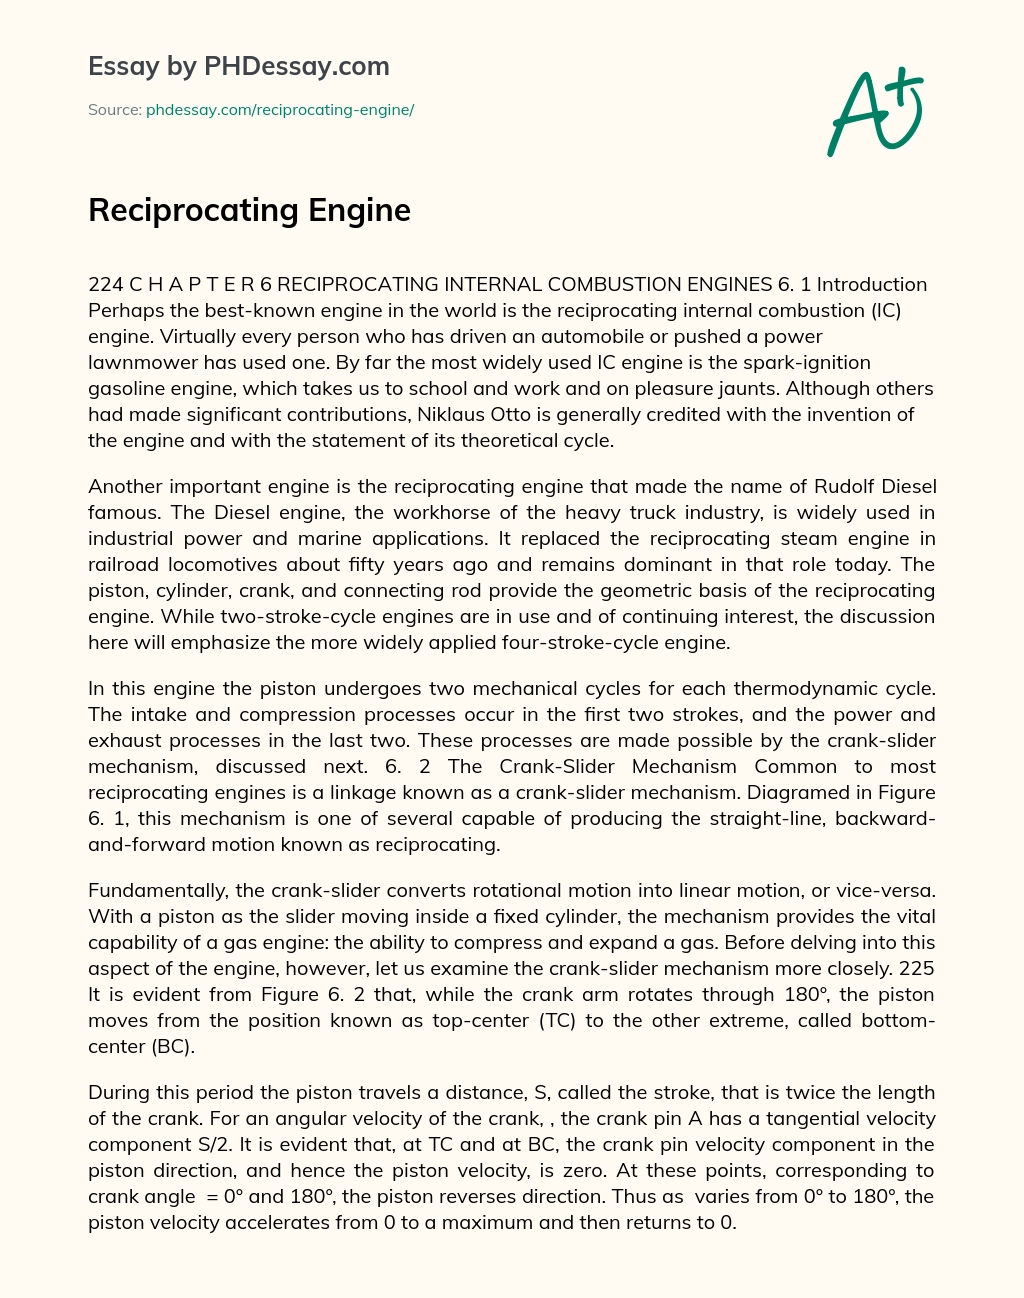 Reciprocating Engine essay